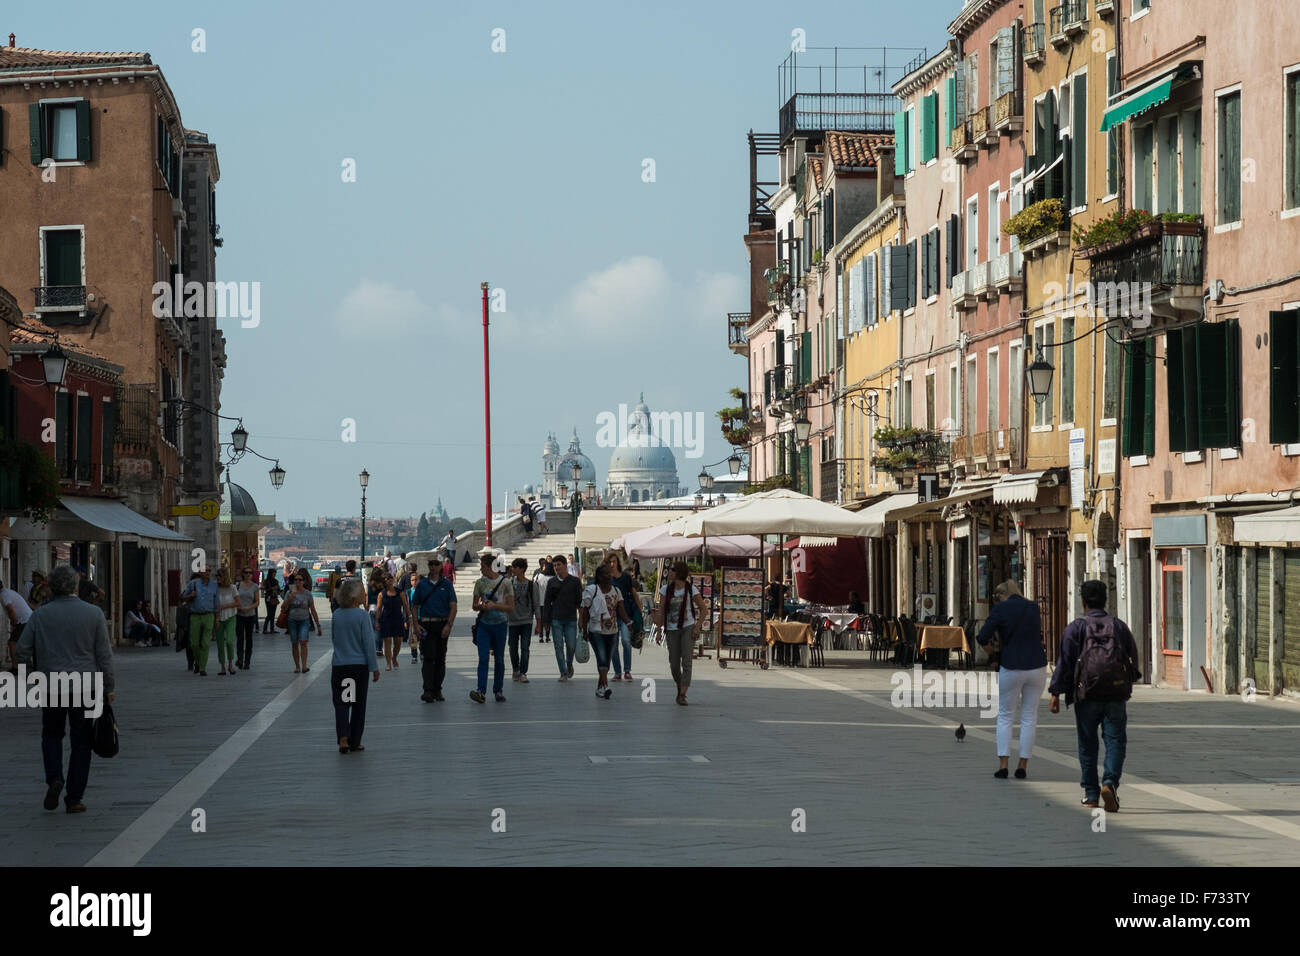 Via Garibaldi, Castello, Venice, Italy. Stock Photo